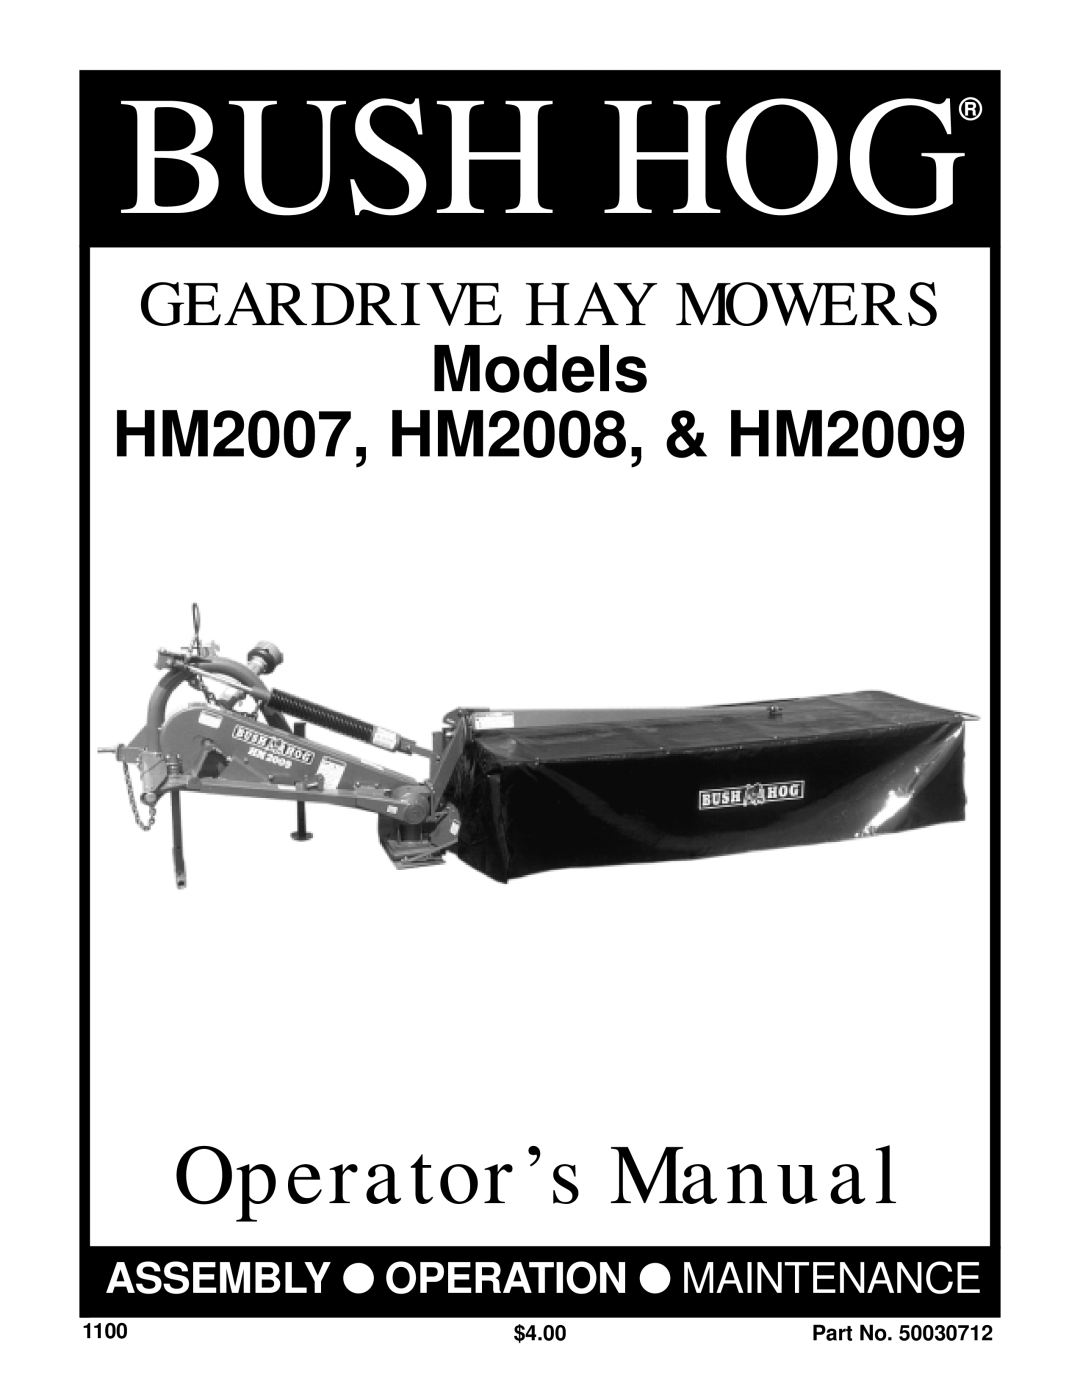 Bush Hog manual Models HM2007, HM2008, & HM2009, Bush Hog, Operator’s Manual, Geardrive Hay Mowers, 1100, $4.00 